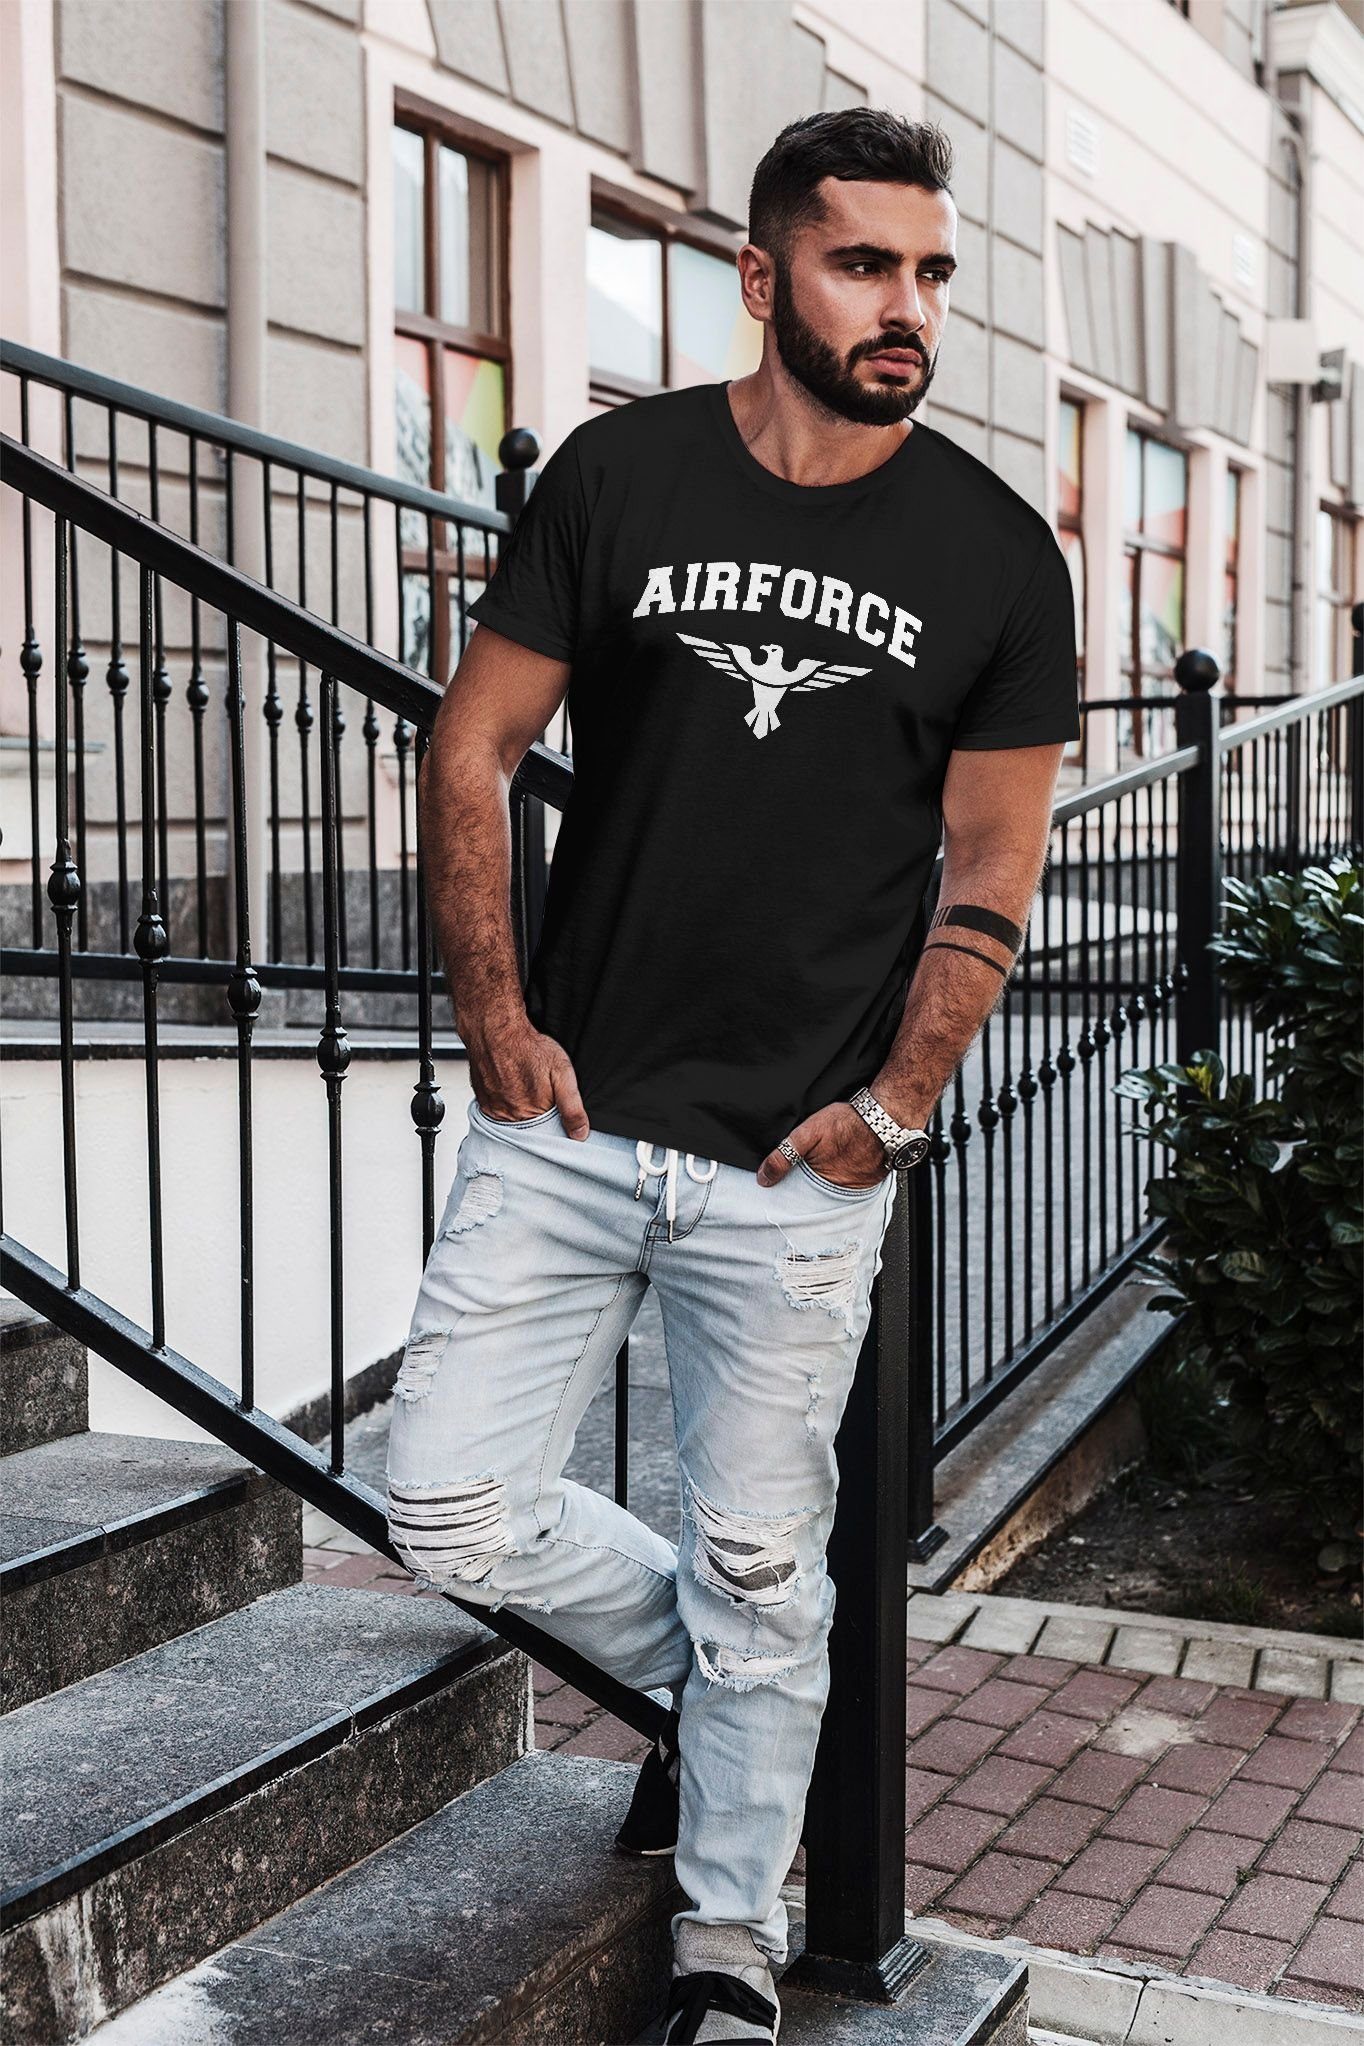 Print Airforce Neverless® mit Adler Army Militär T-Shirt Print-Shirt Herren T-Shirt US Streetstyle schwarz Neverless Fashion